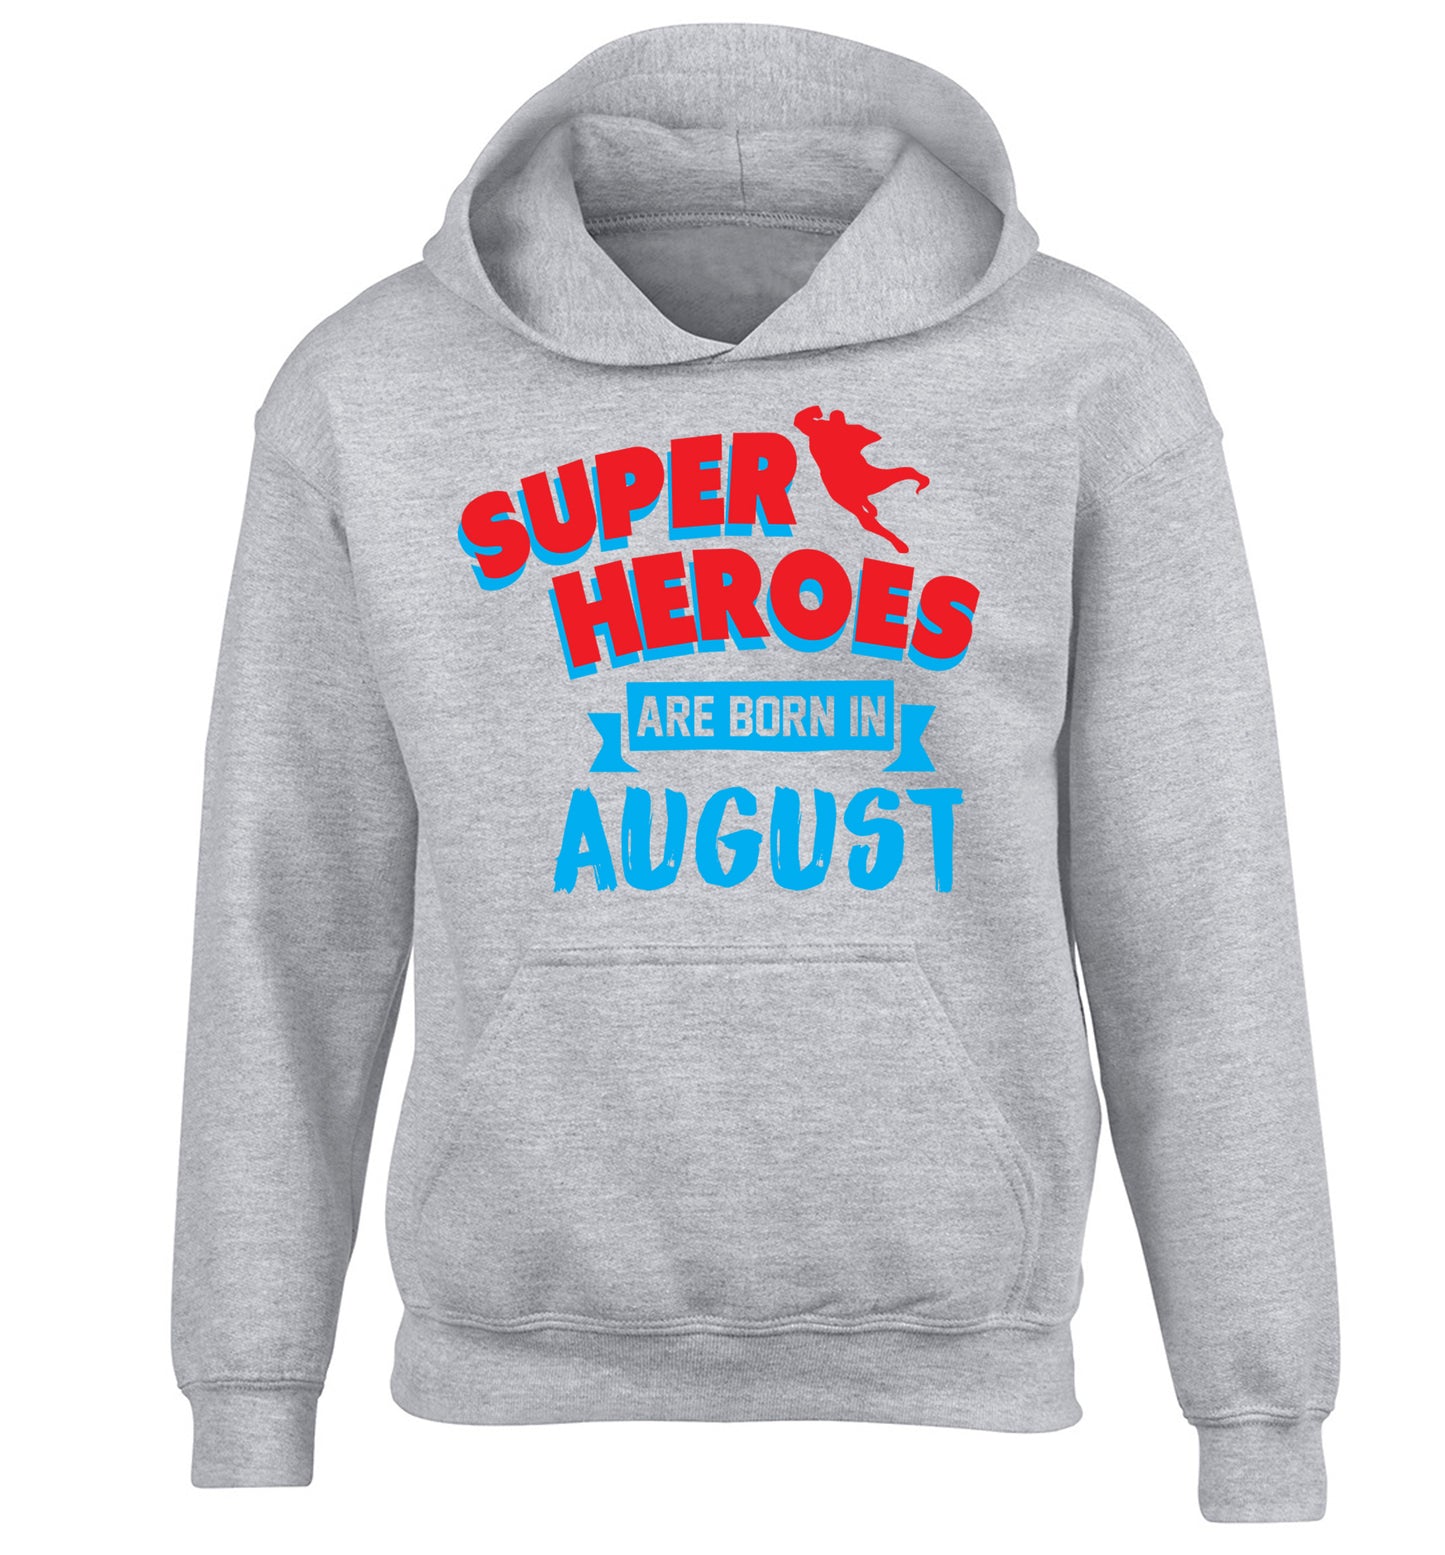 Superheroes are born in August children's grey hoodie 12-13 Years